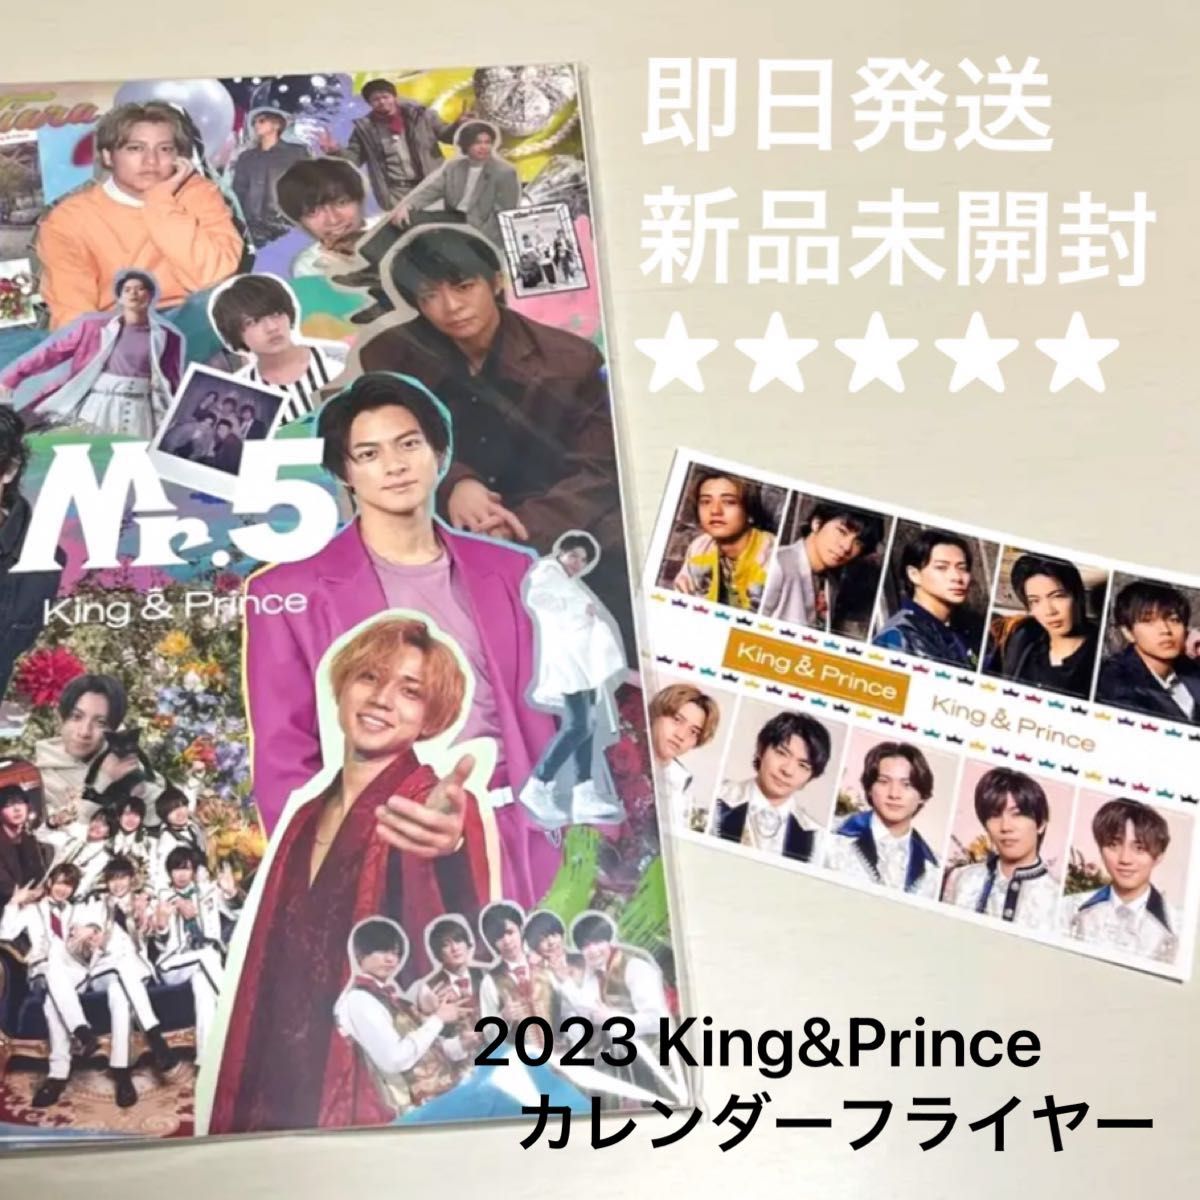 King & Prince「Mr.5 」ベストアルバム dear tiara盤ティアラ盤